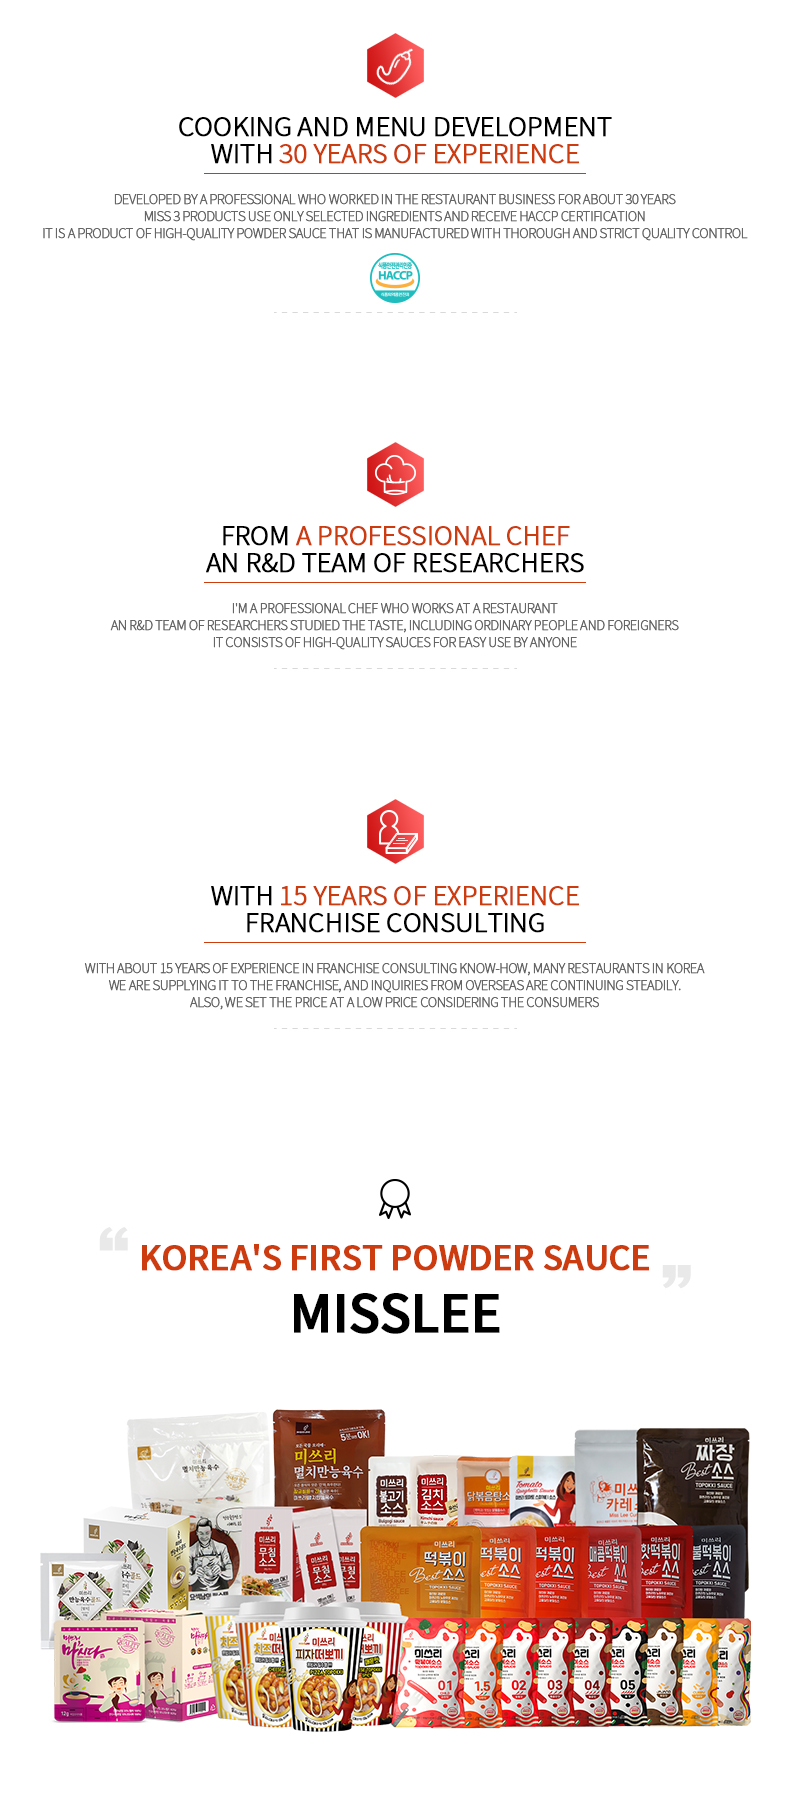 Brand Story : Recipe and menu development of 30 years of caree / Topokki Gourmet Bubuginae operation / 15 years of franchise consulting / Korea's first powder sauce 